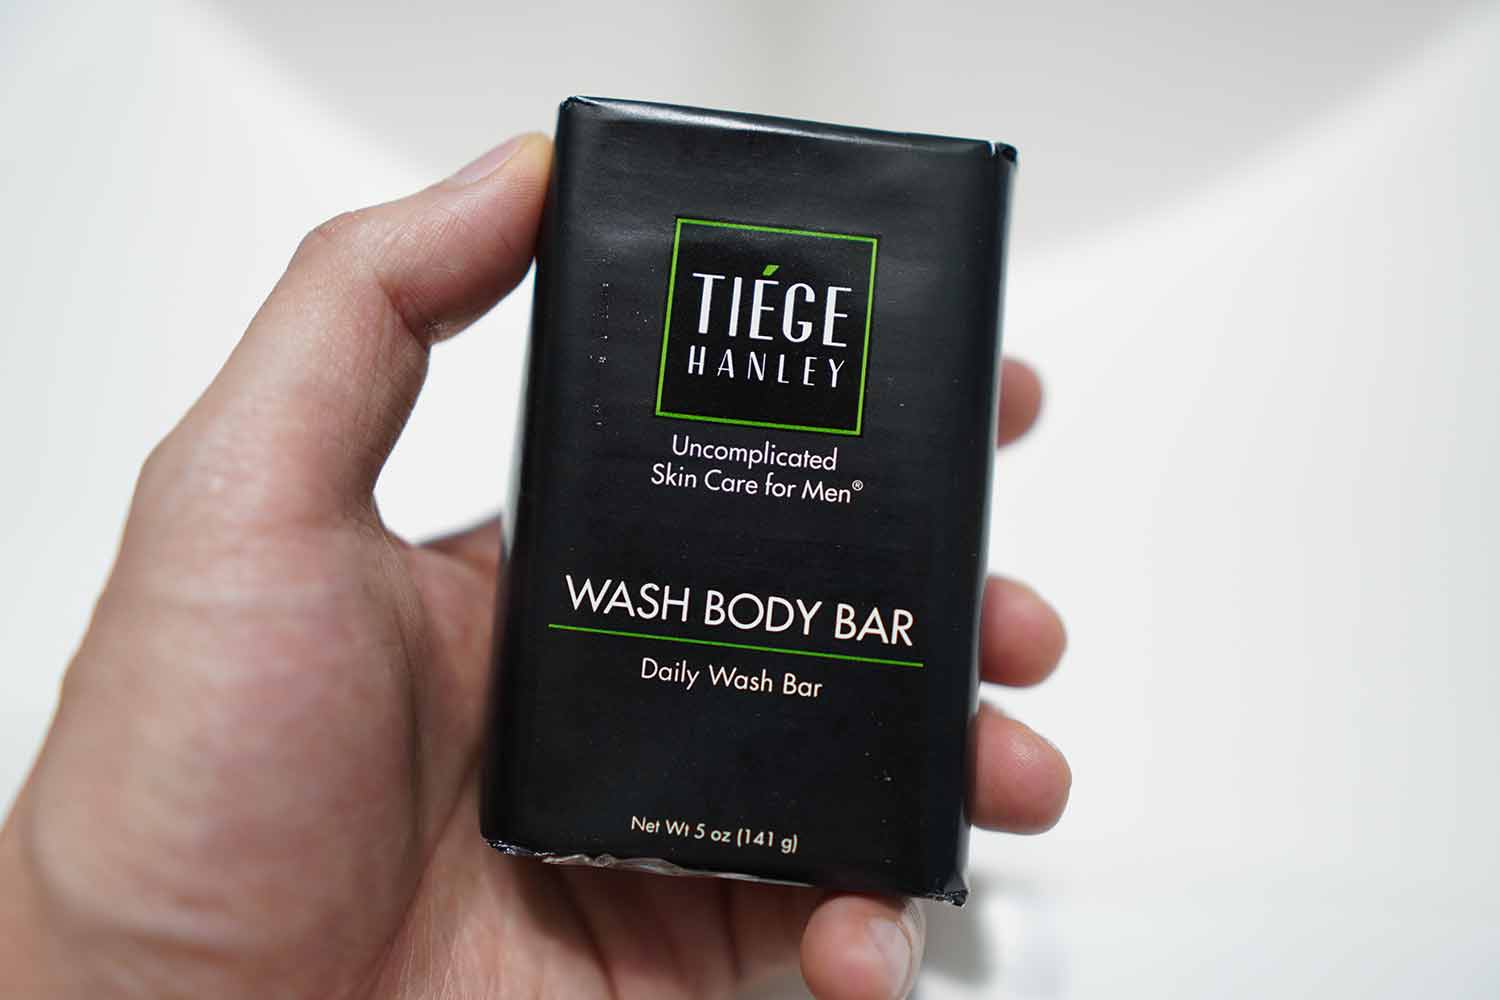 Tiege Hanley Wash Body Bar Packaging